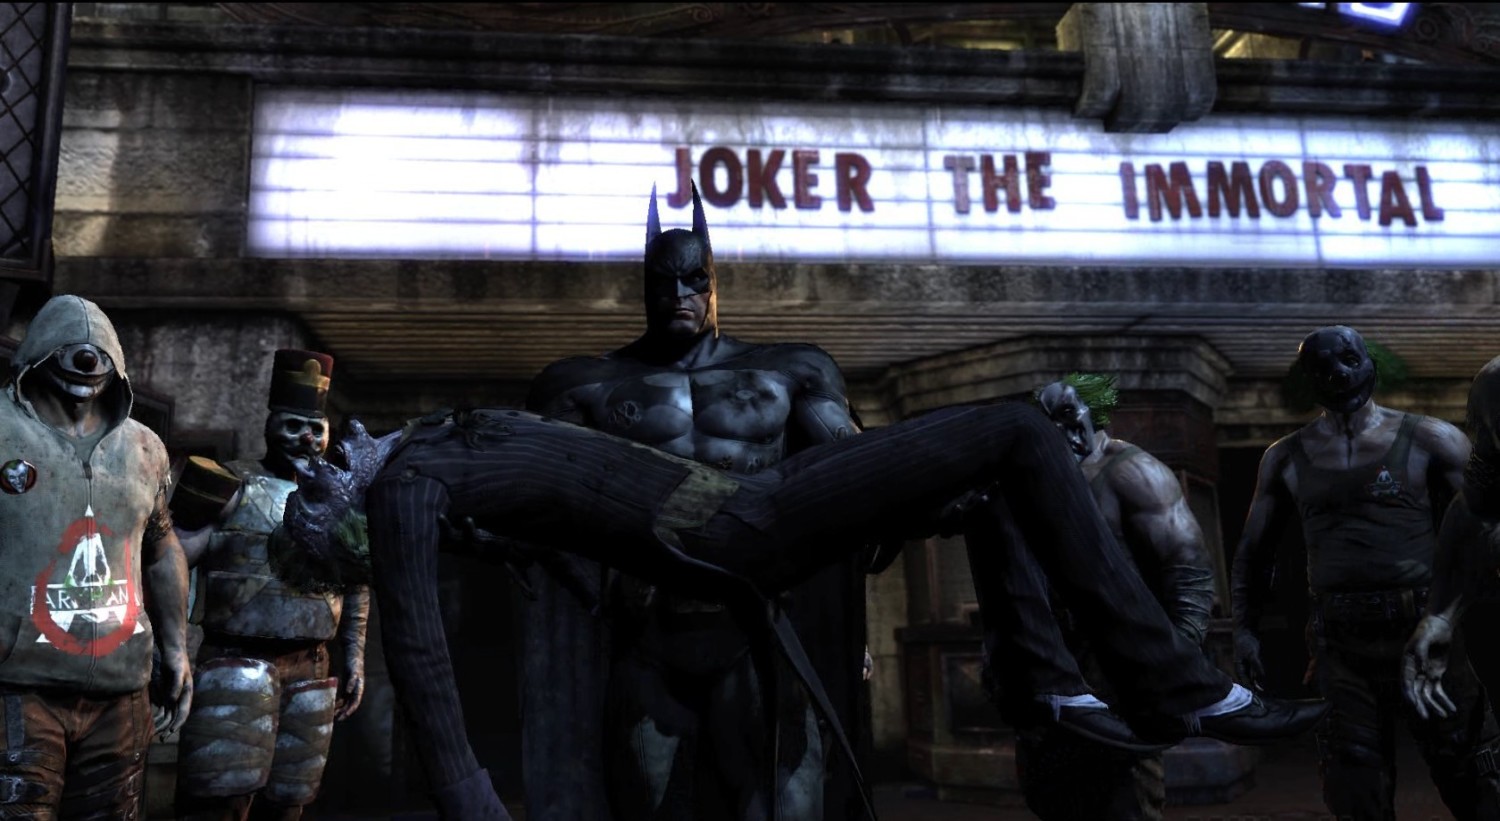 Joker The Inmortal-Inevitable